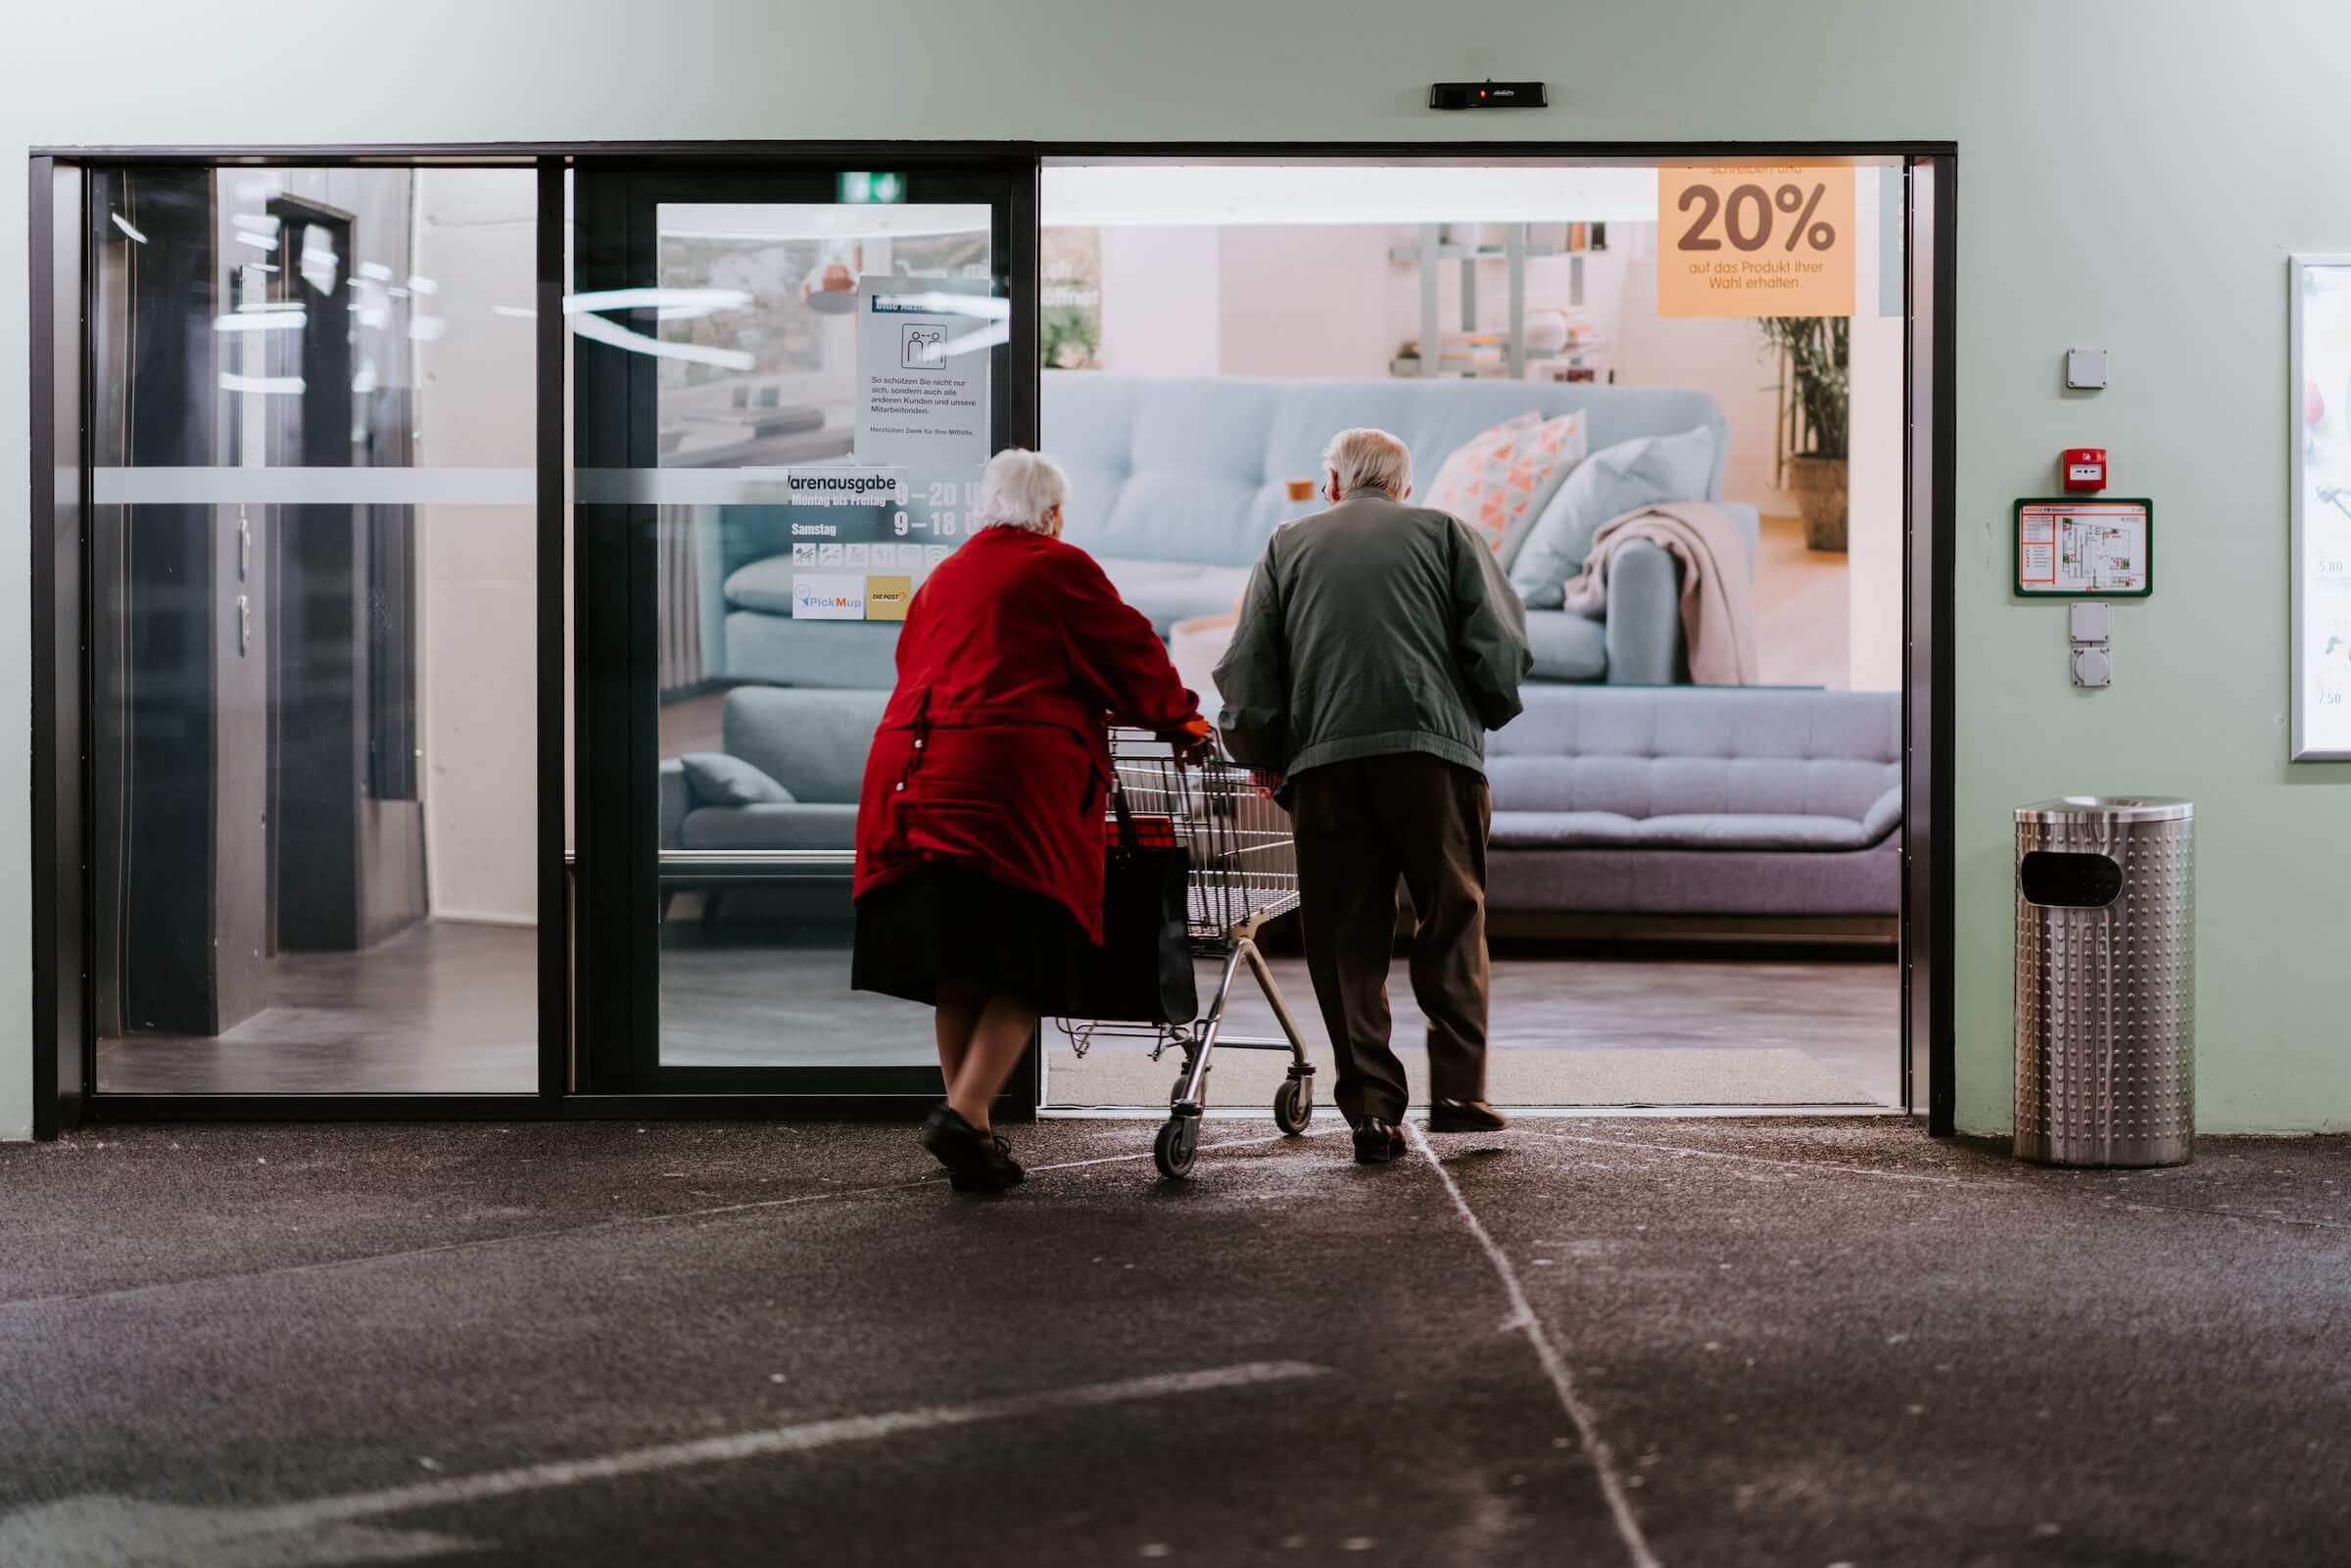 Two elderly people walking into a shop